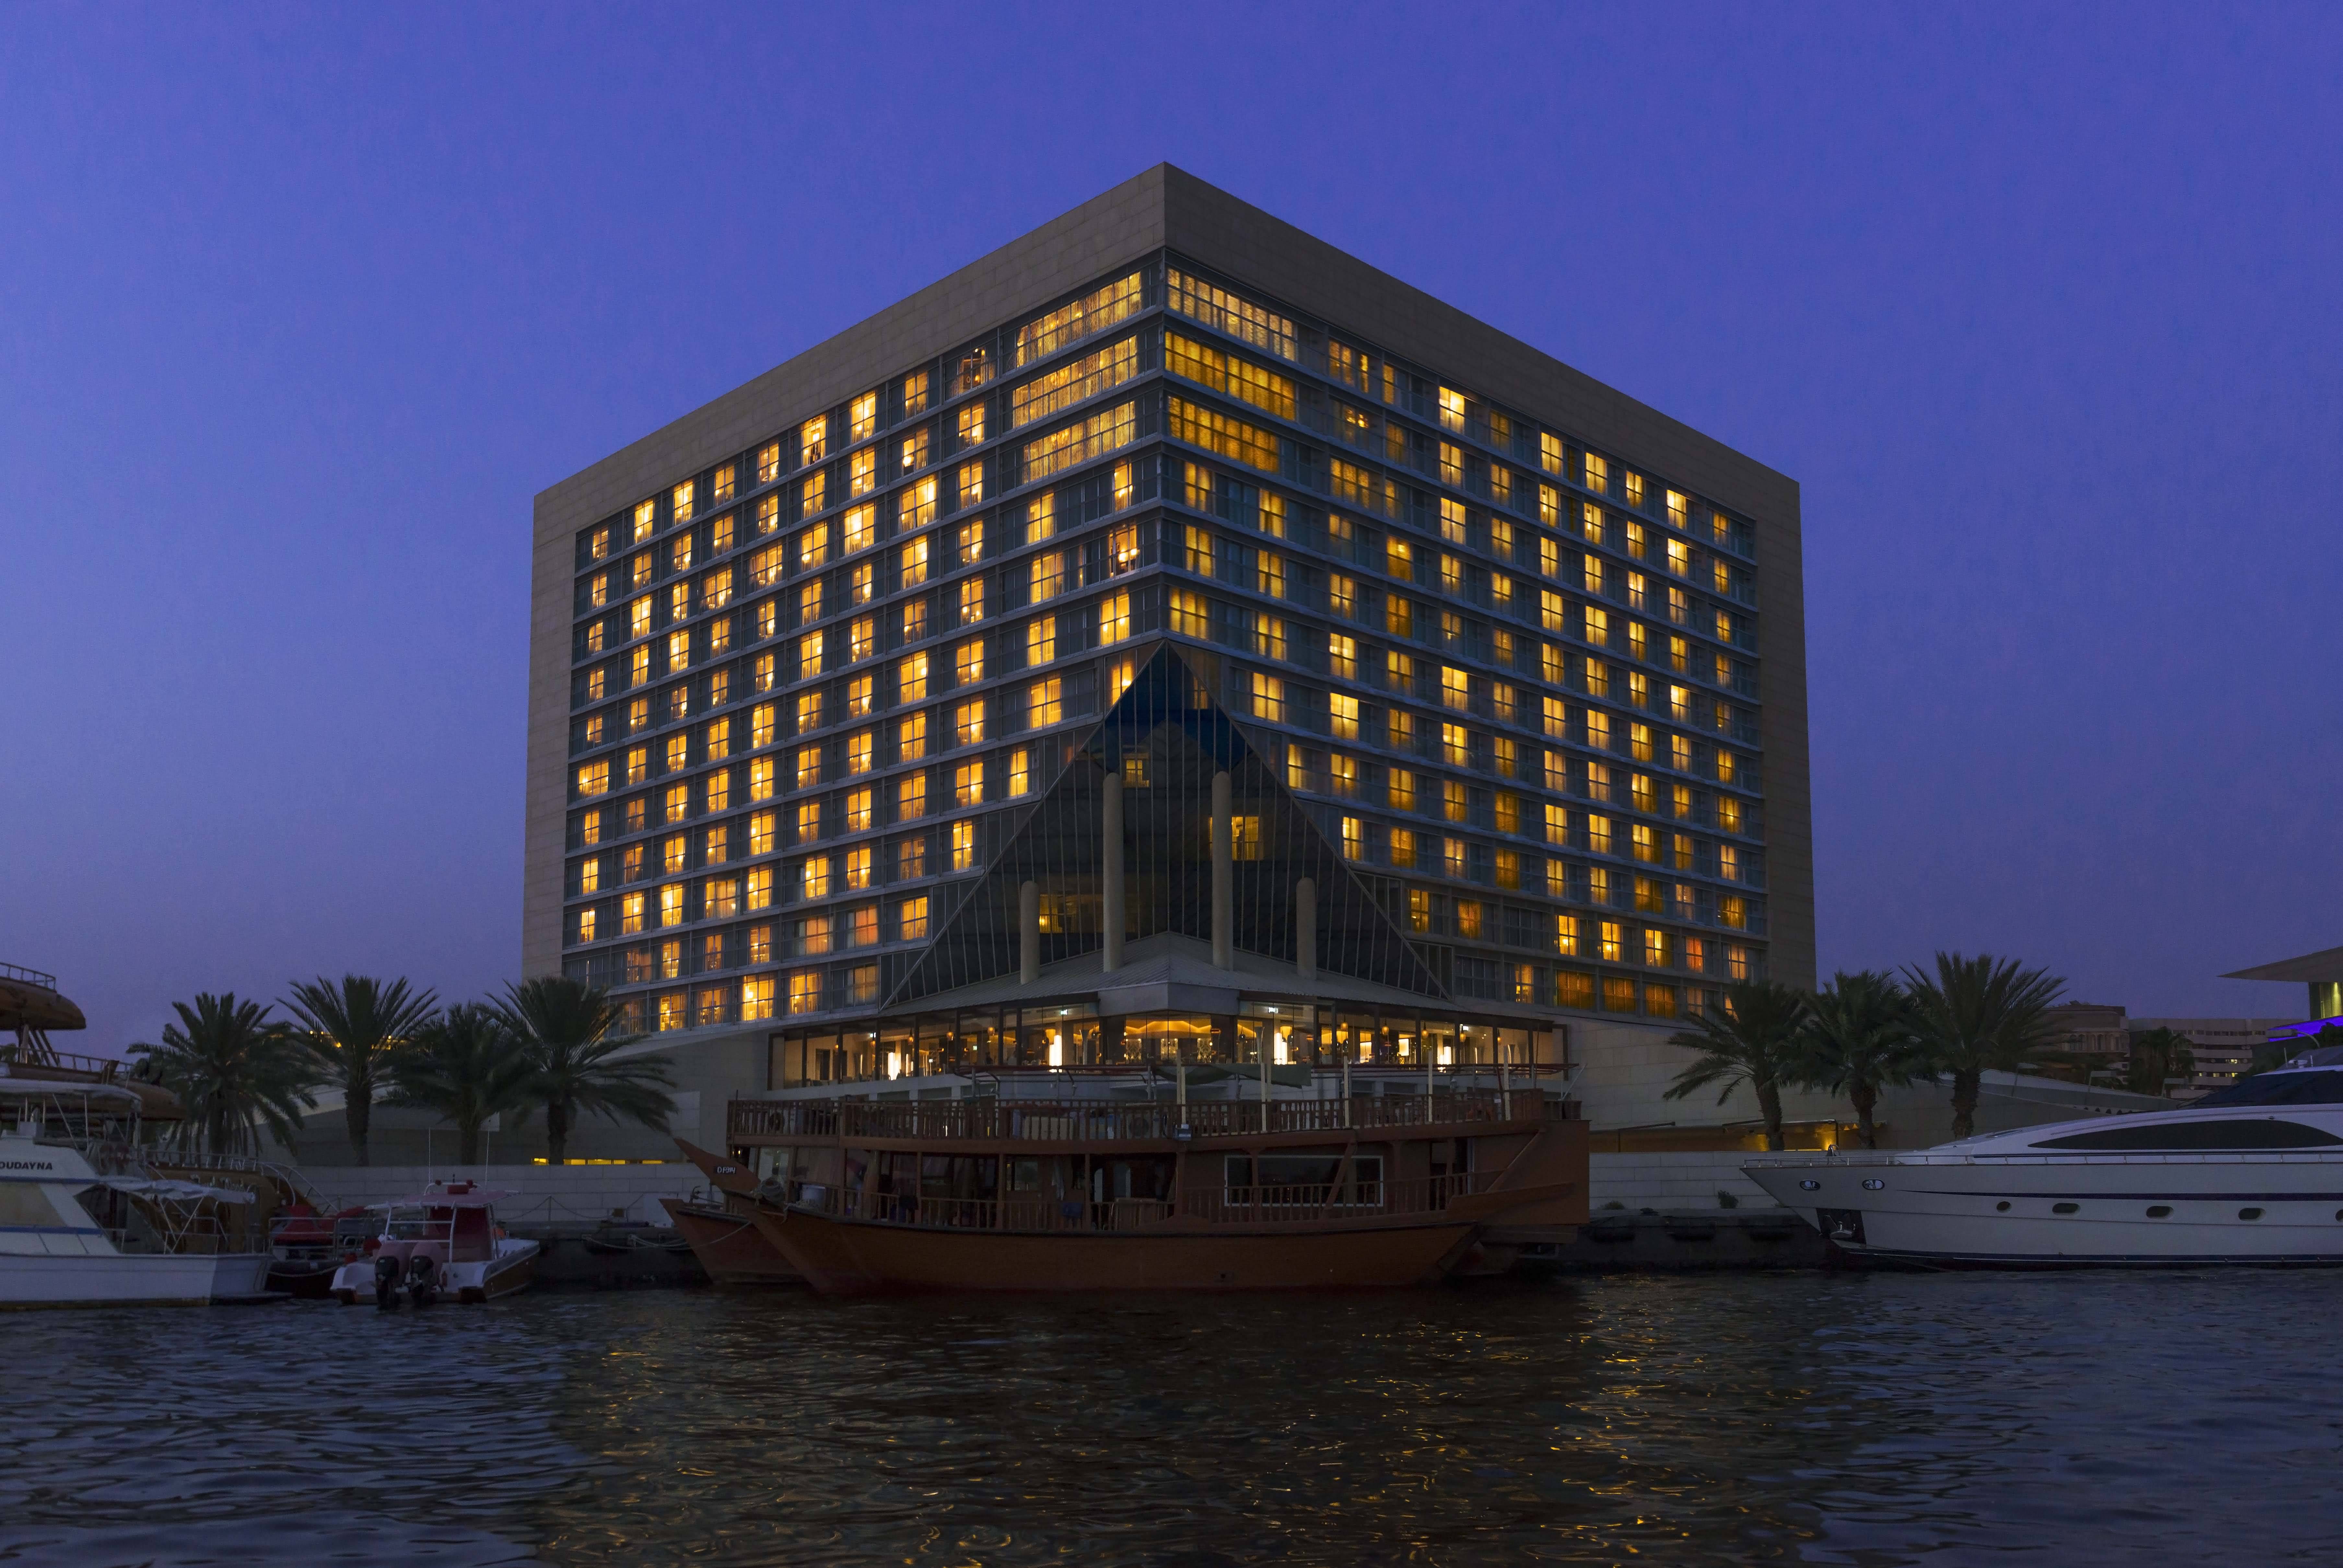 عروض فندق وأبراج شيراتون خور دبي لشهر رمضان 2016